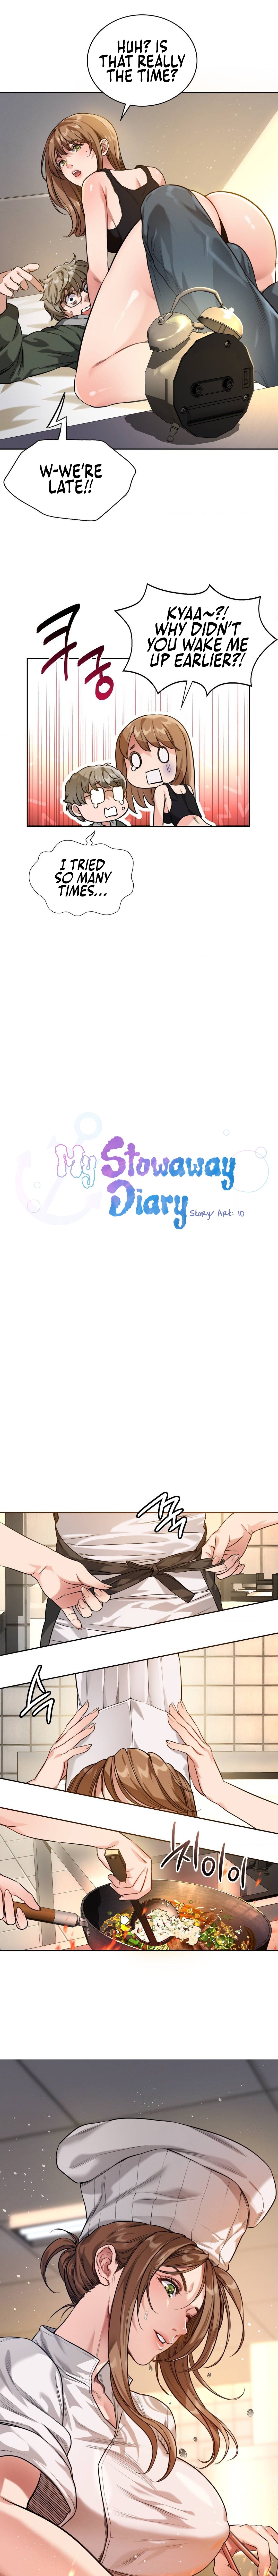 my-stowaway-diary-chap-1-8